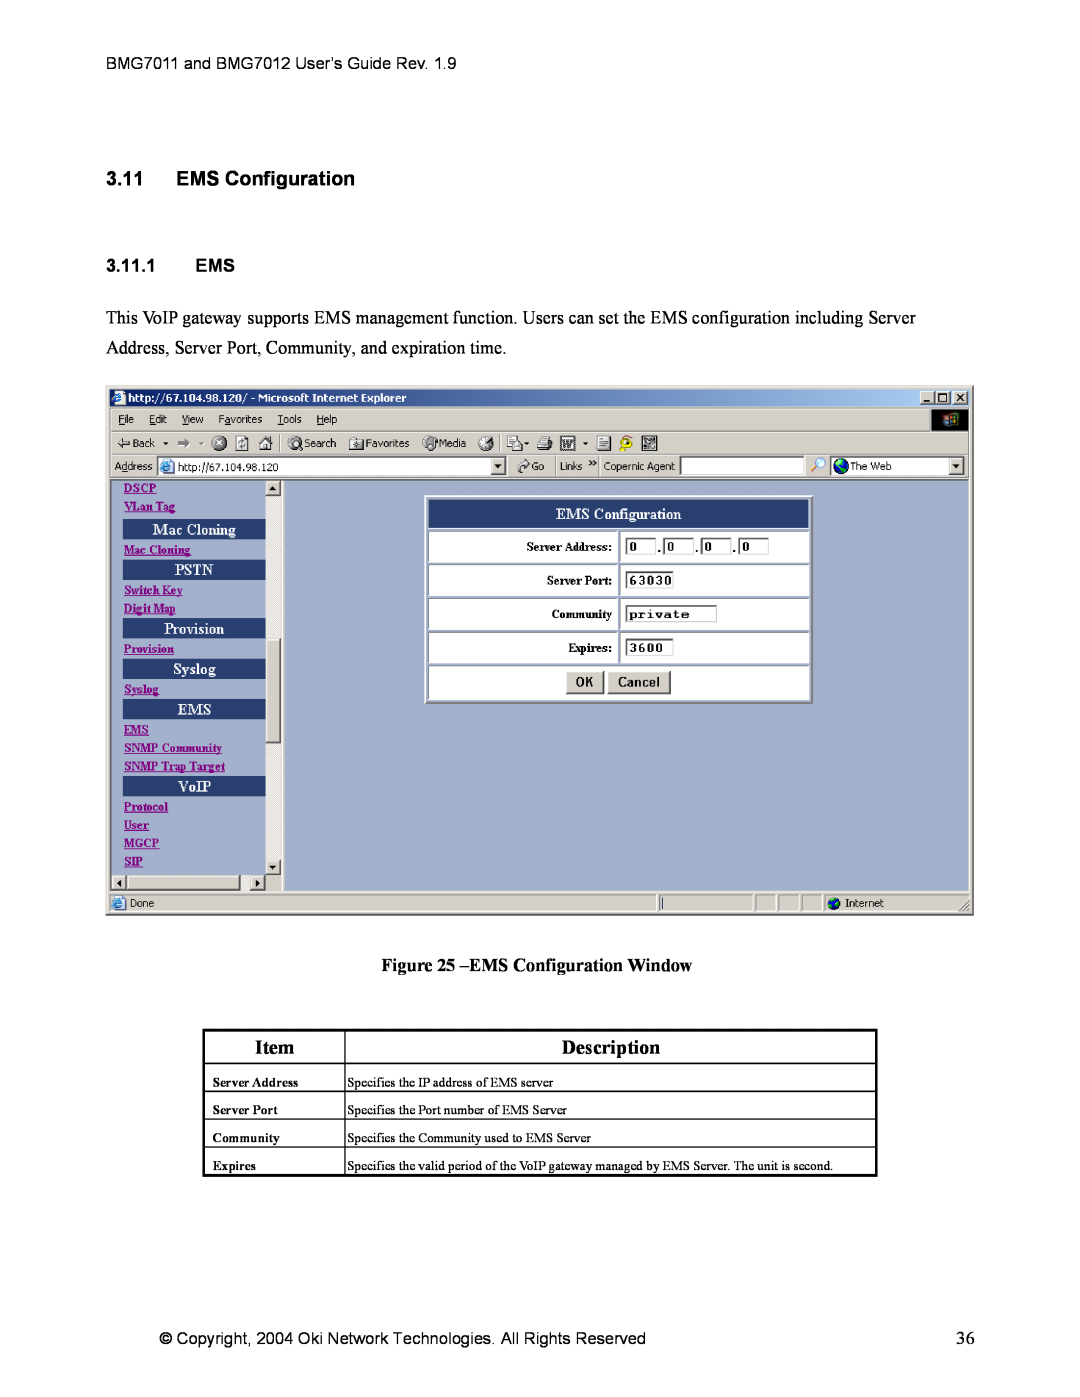 Oki BMG7012, BMG7011 manual 3.11EMS Configuration, 3.11.1EMS, EMSConfiguration Window, Description 